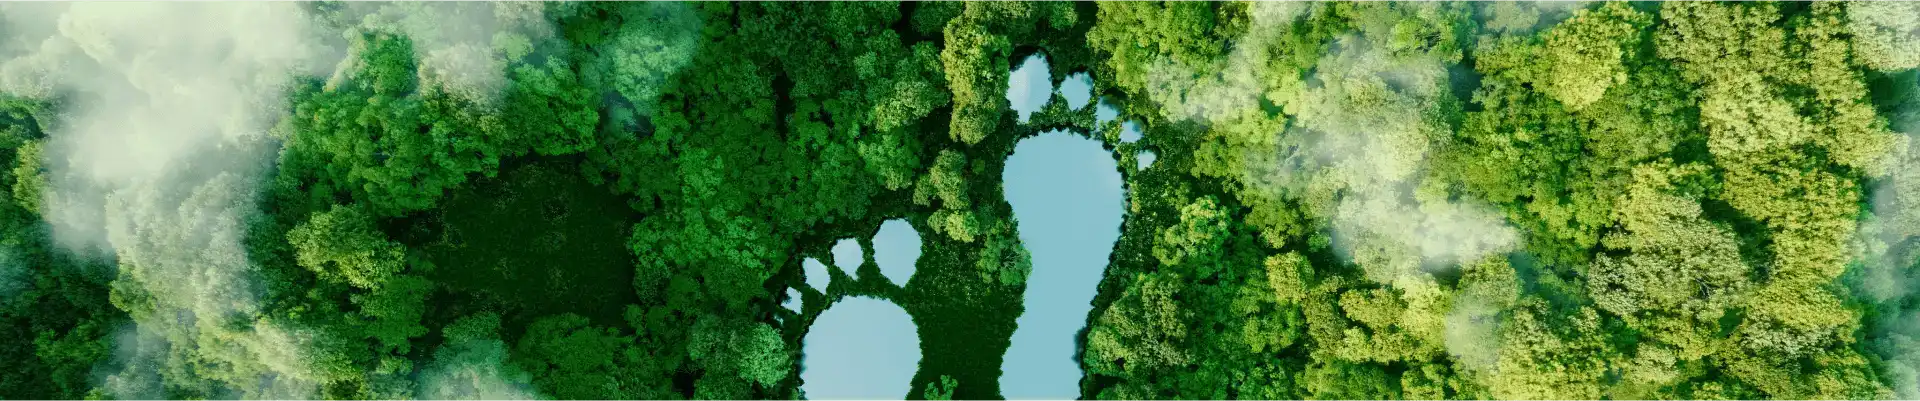 lake with footprints 